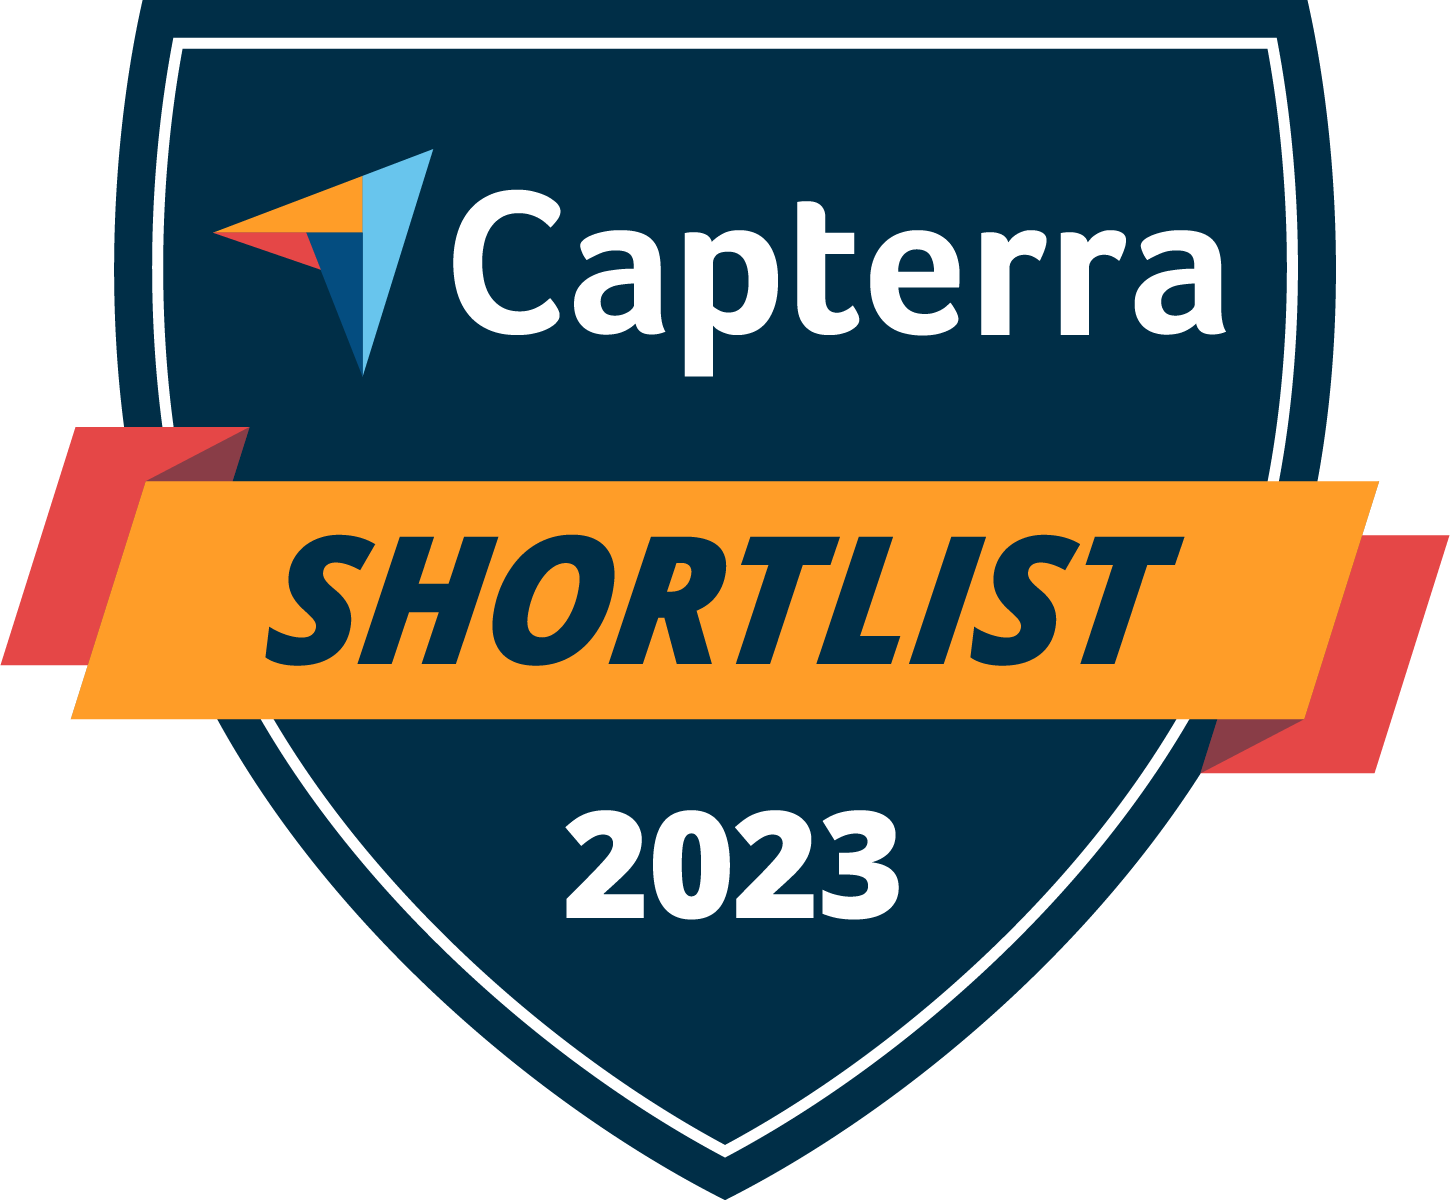 Capterra Shortlist for 2023